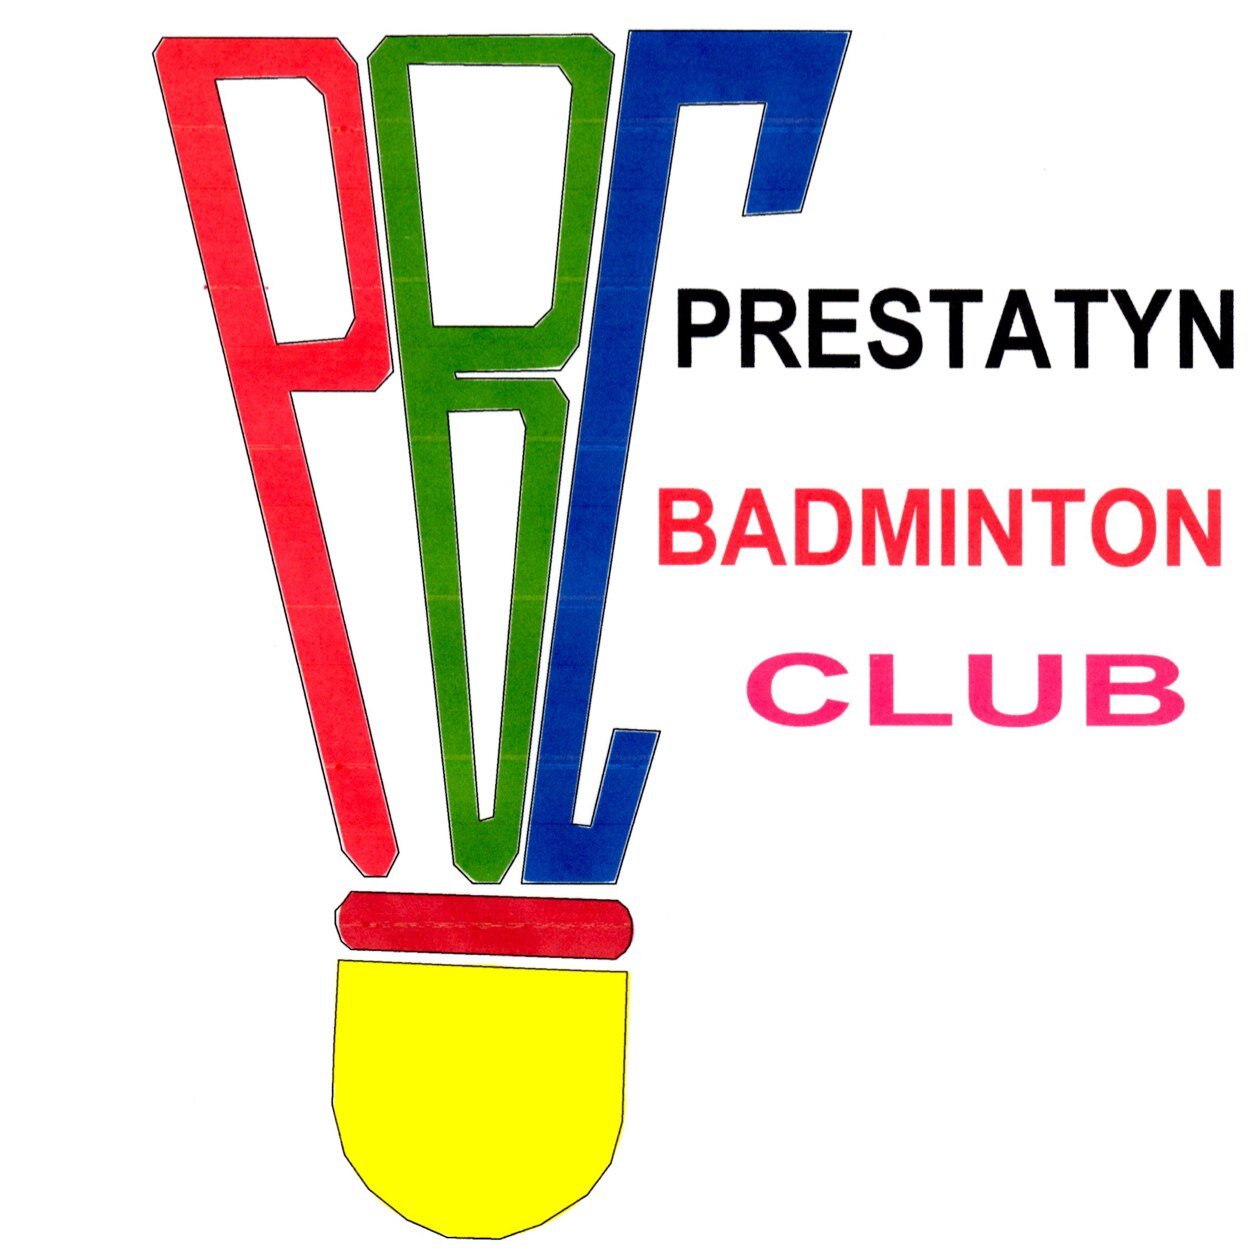 Prestatyn Badminton Club, Seniors play Monday's 6pm till 8pm & Wednesdays 730pm till 9pm. Juniors play Wednesdays 6pm till 730pm.